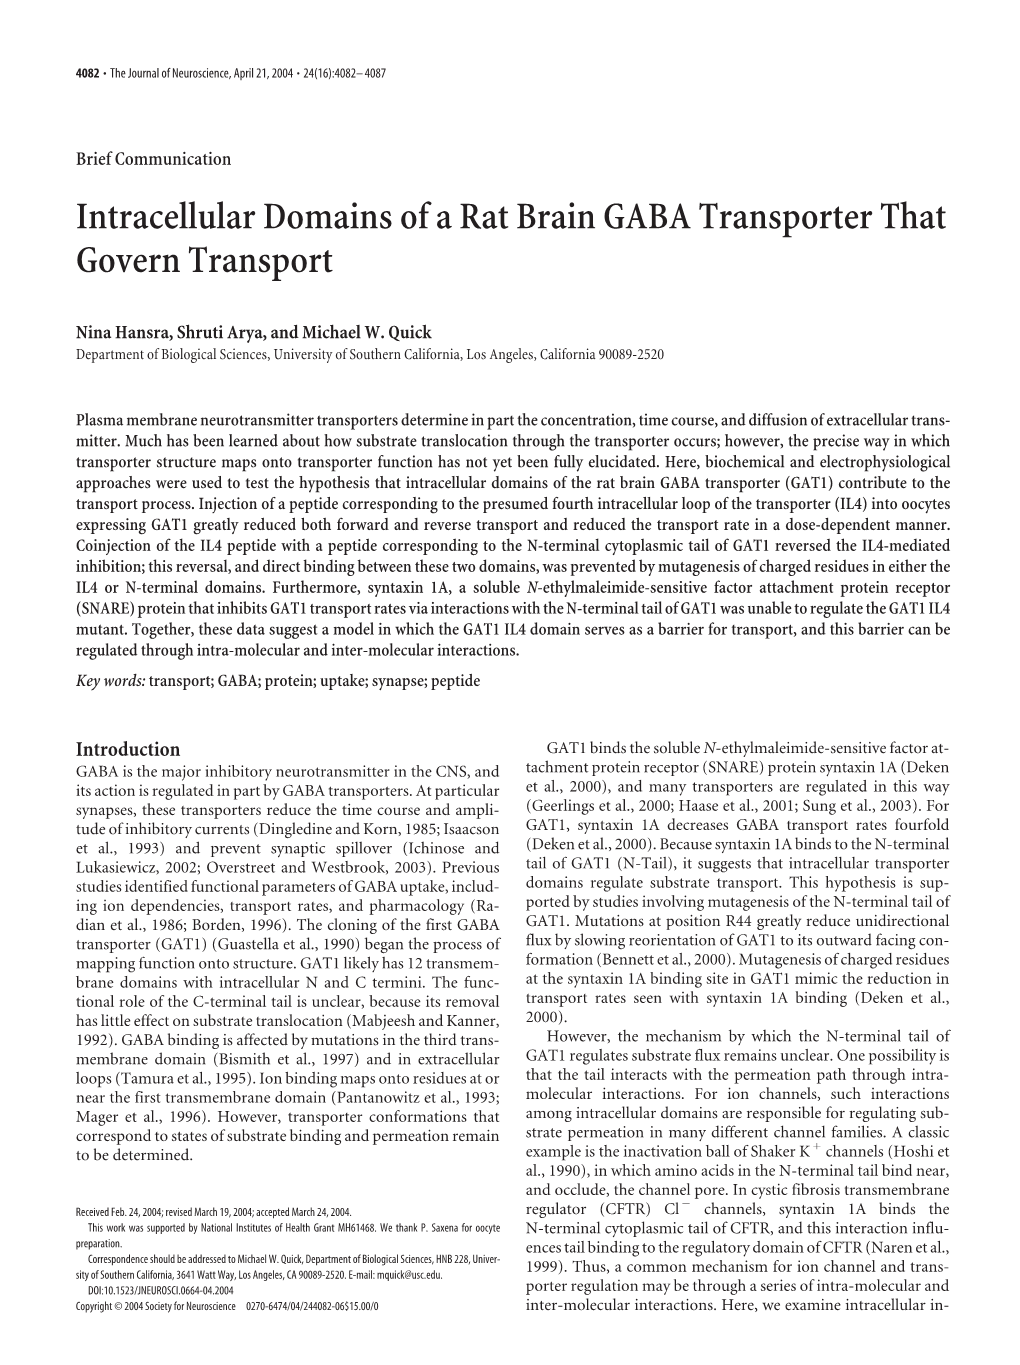 Intracellular Domains of a Rat Brain GABA Transporter That Govern Transport